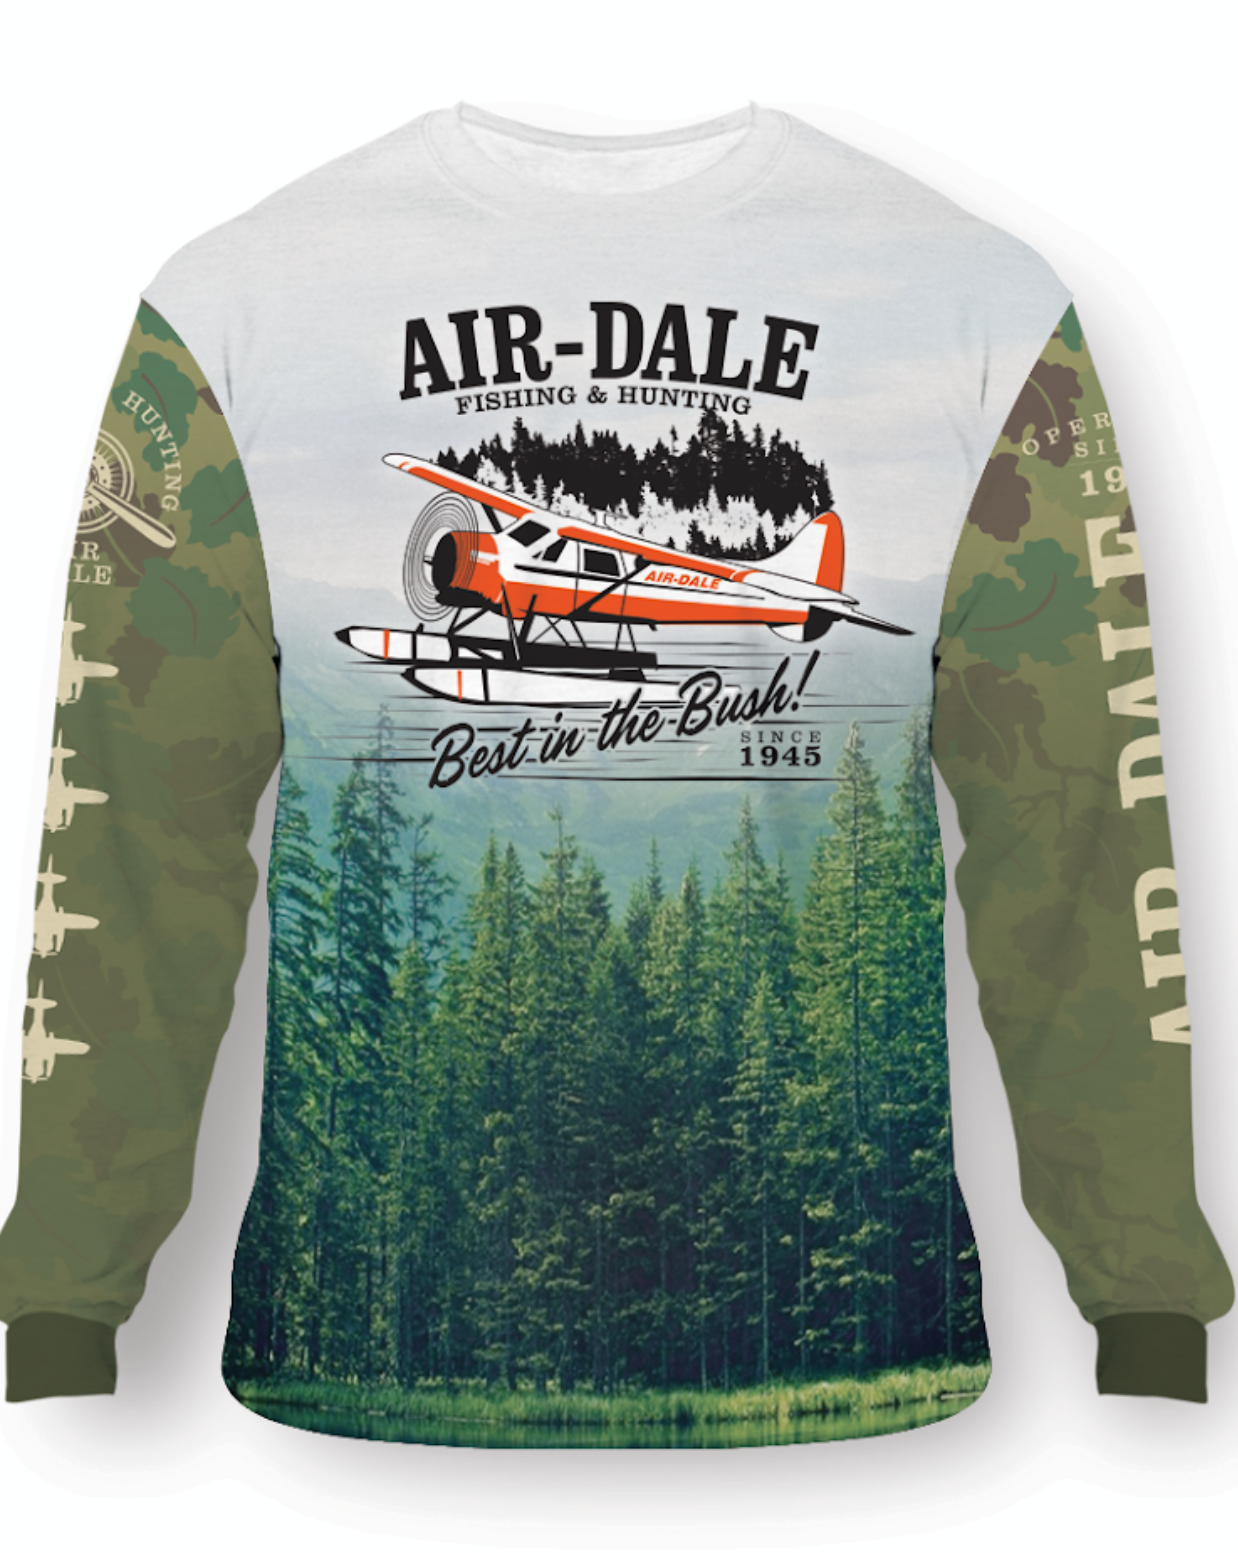 Air-Dale Fishing & Hunting, Wawa, Northern Ontario, Canada